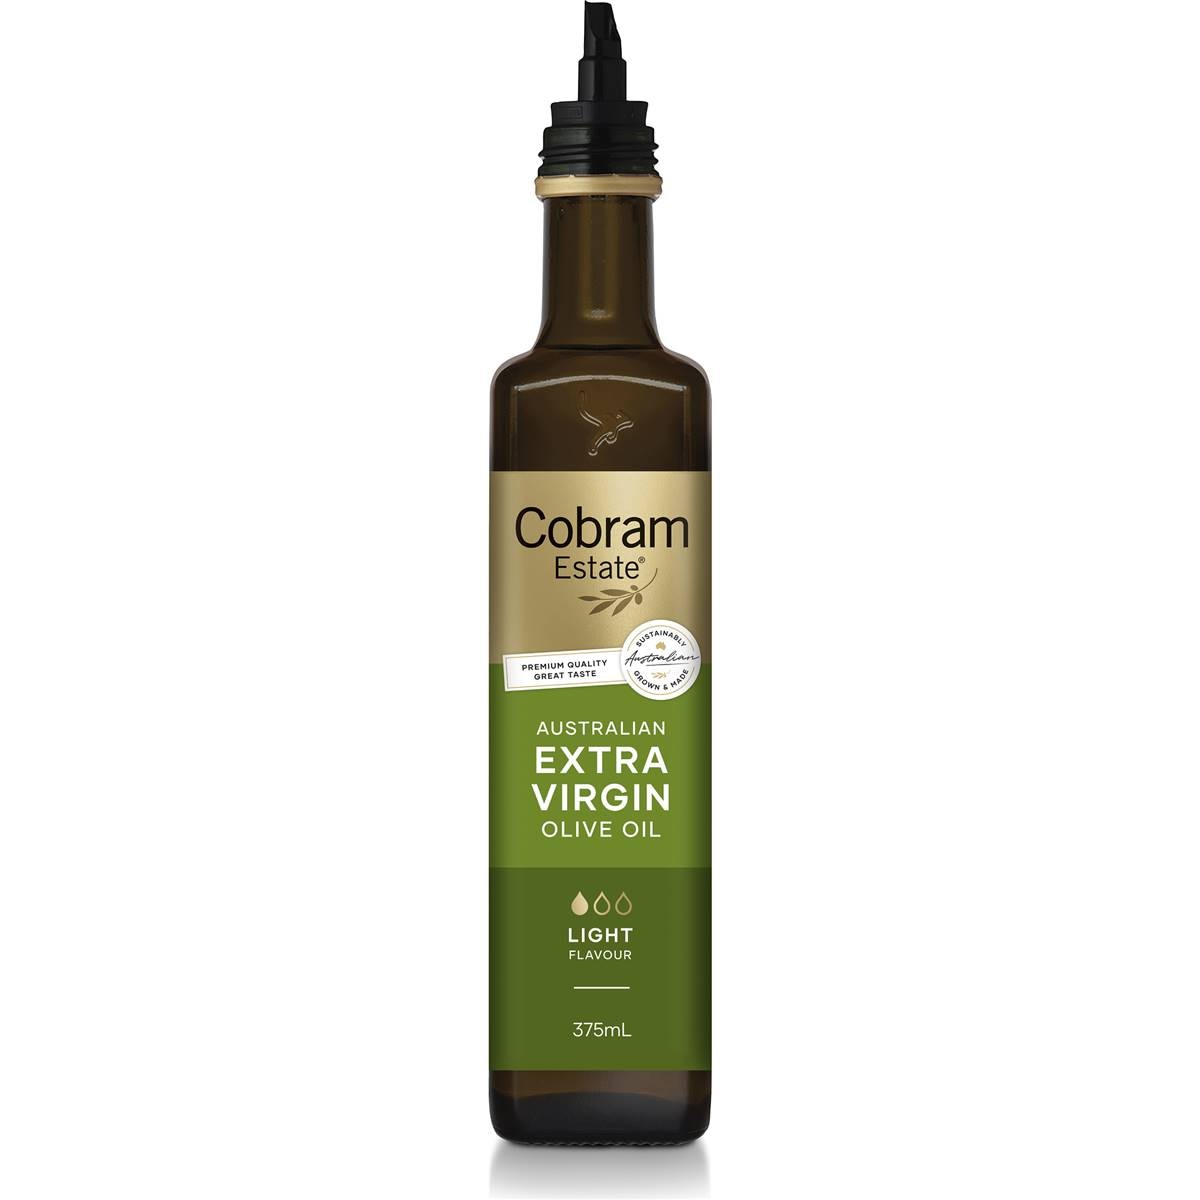 Calories in Cobram Estate Light Olive Oil Extra Virgin